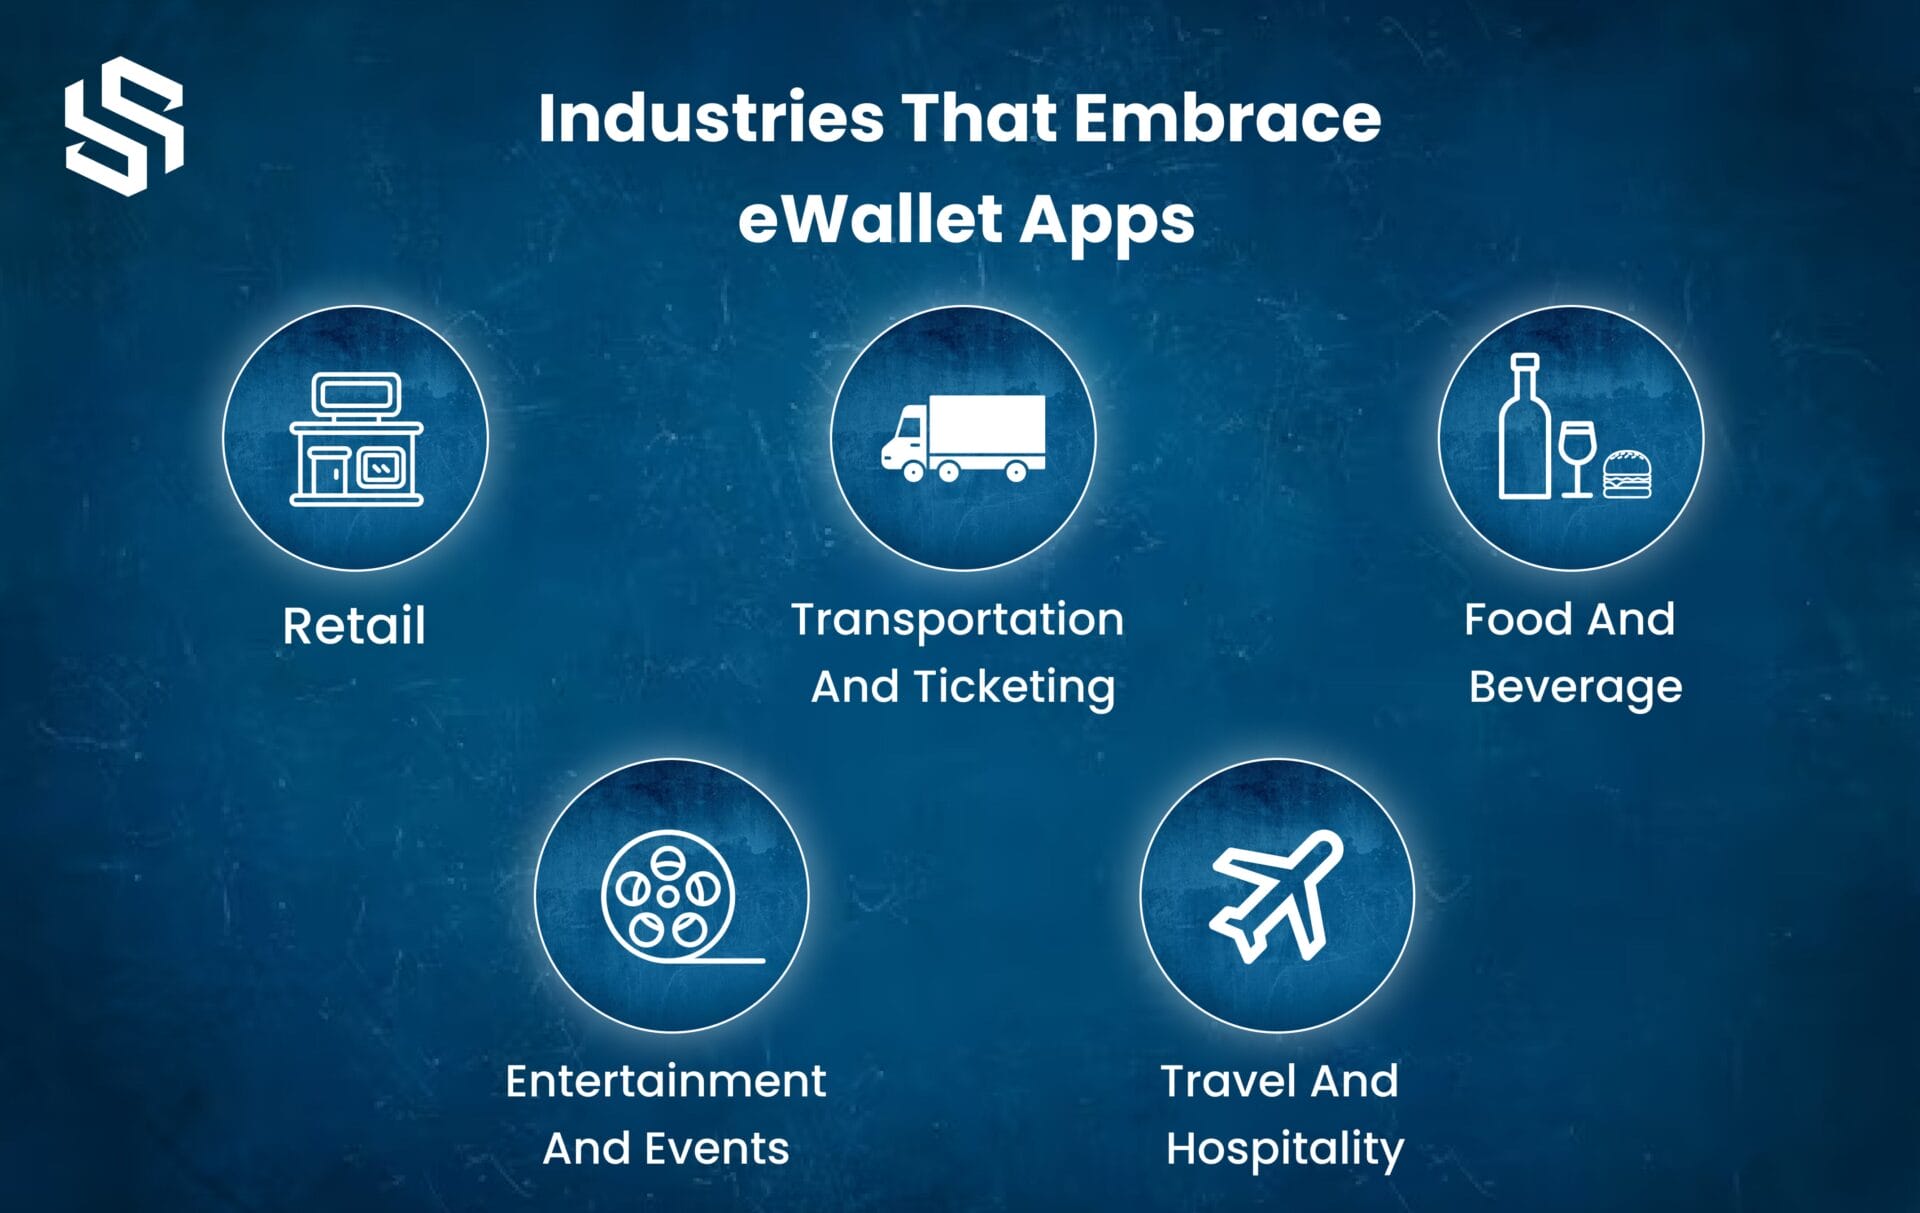 Industries that Embrace eWallet Apps